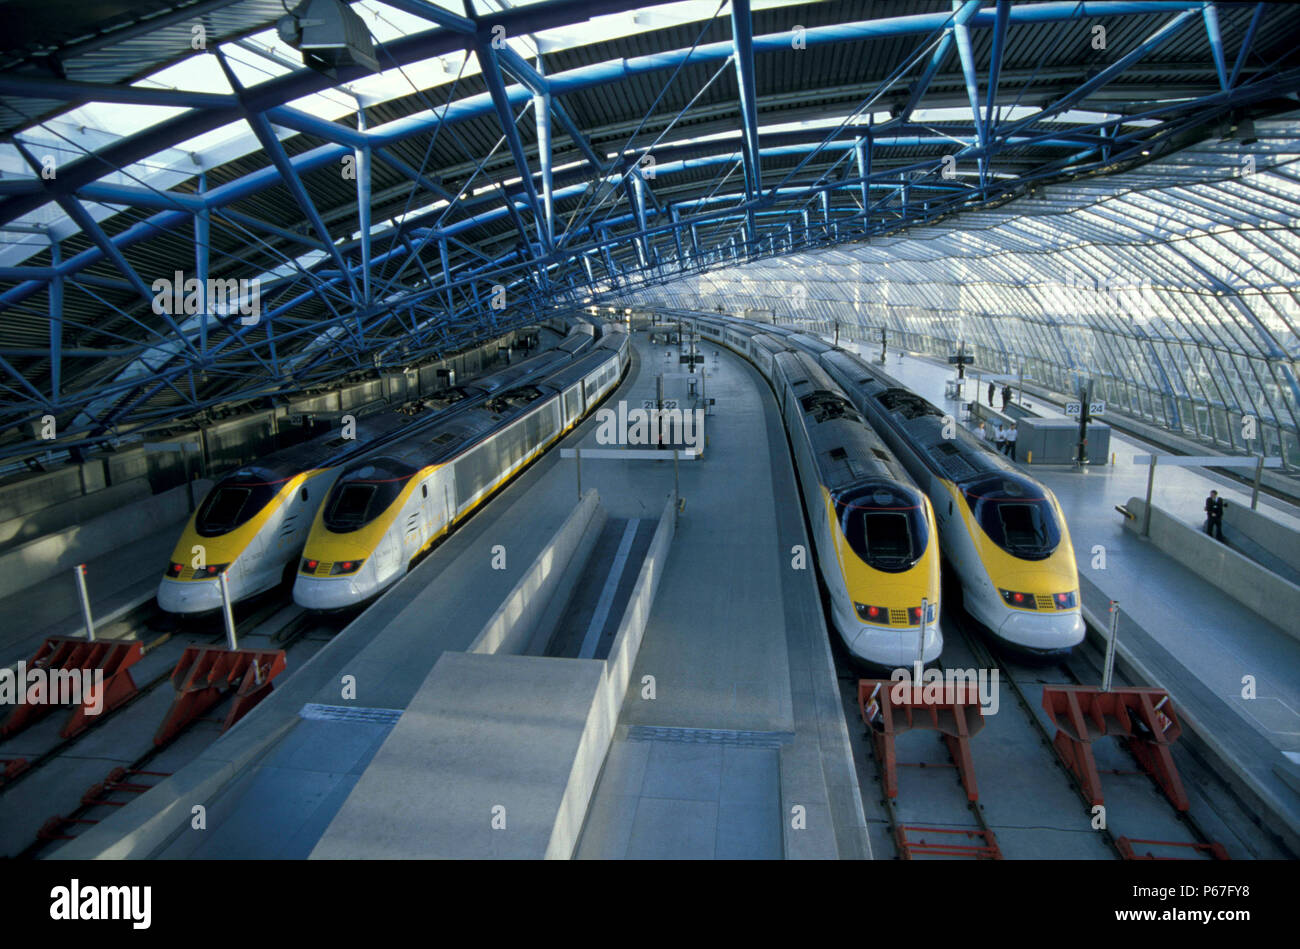 Four Eurostar trains at London's Waterloo International Station. 1996 Stock Photo